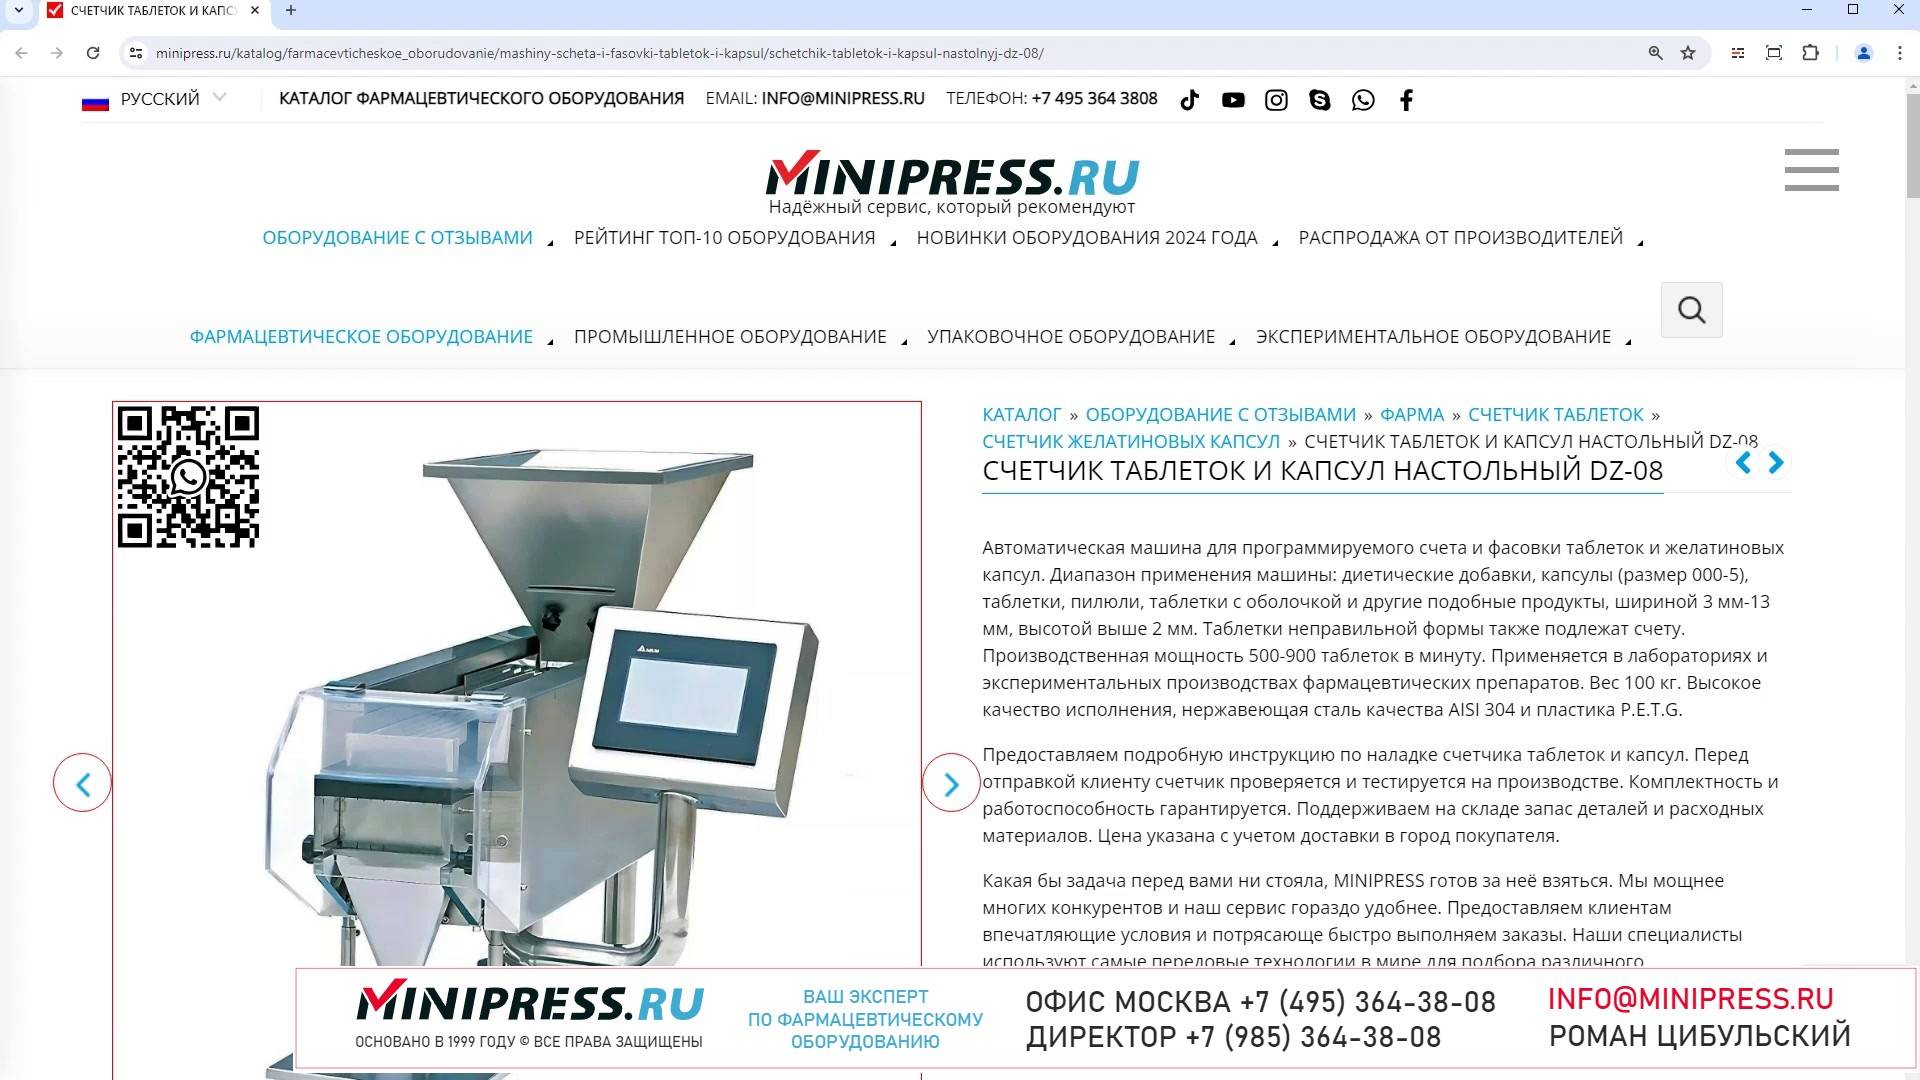 Minipress.ru Счетчик таблеток и капсул настольный DZ-08